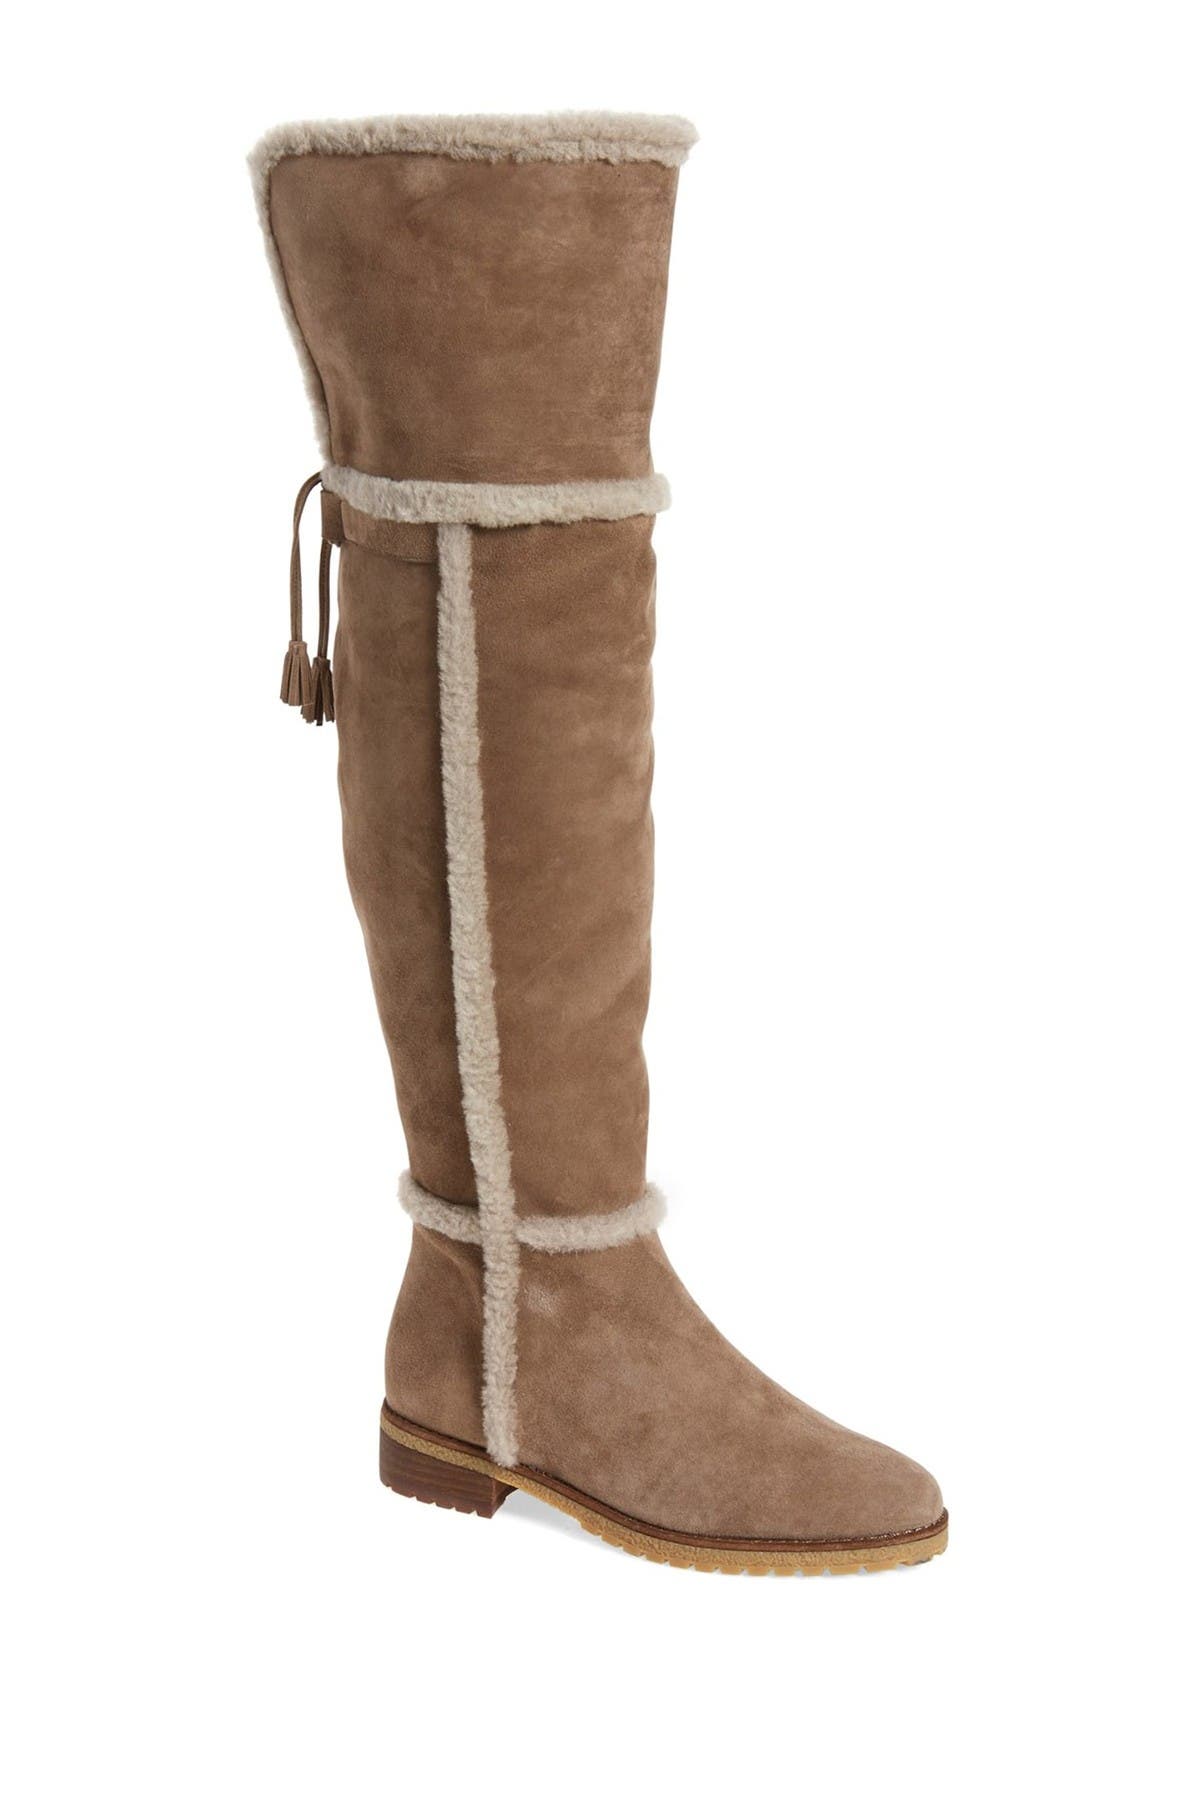 frye women's tamara shearling otk winter boot